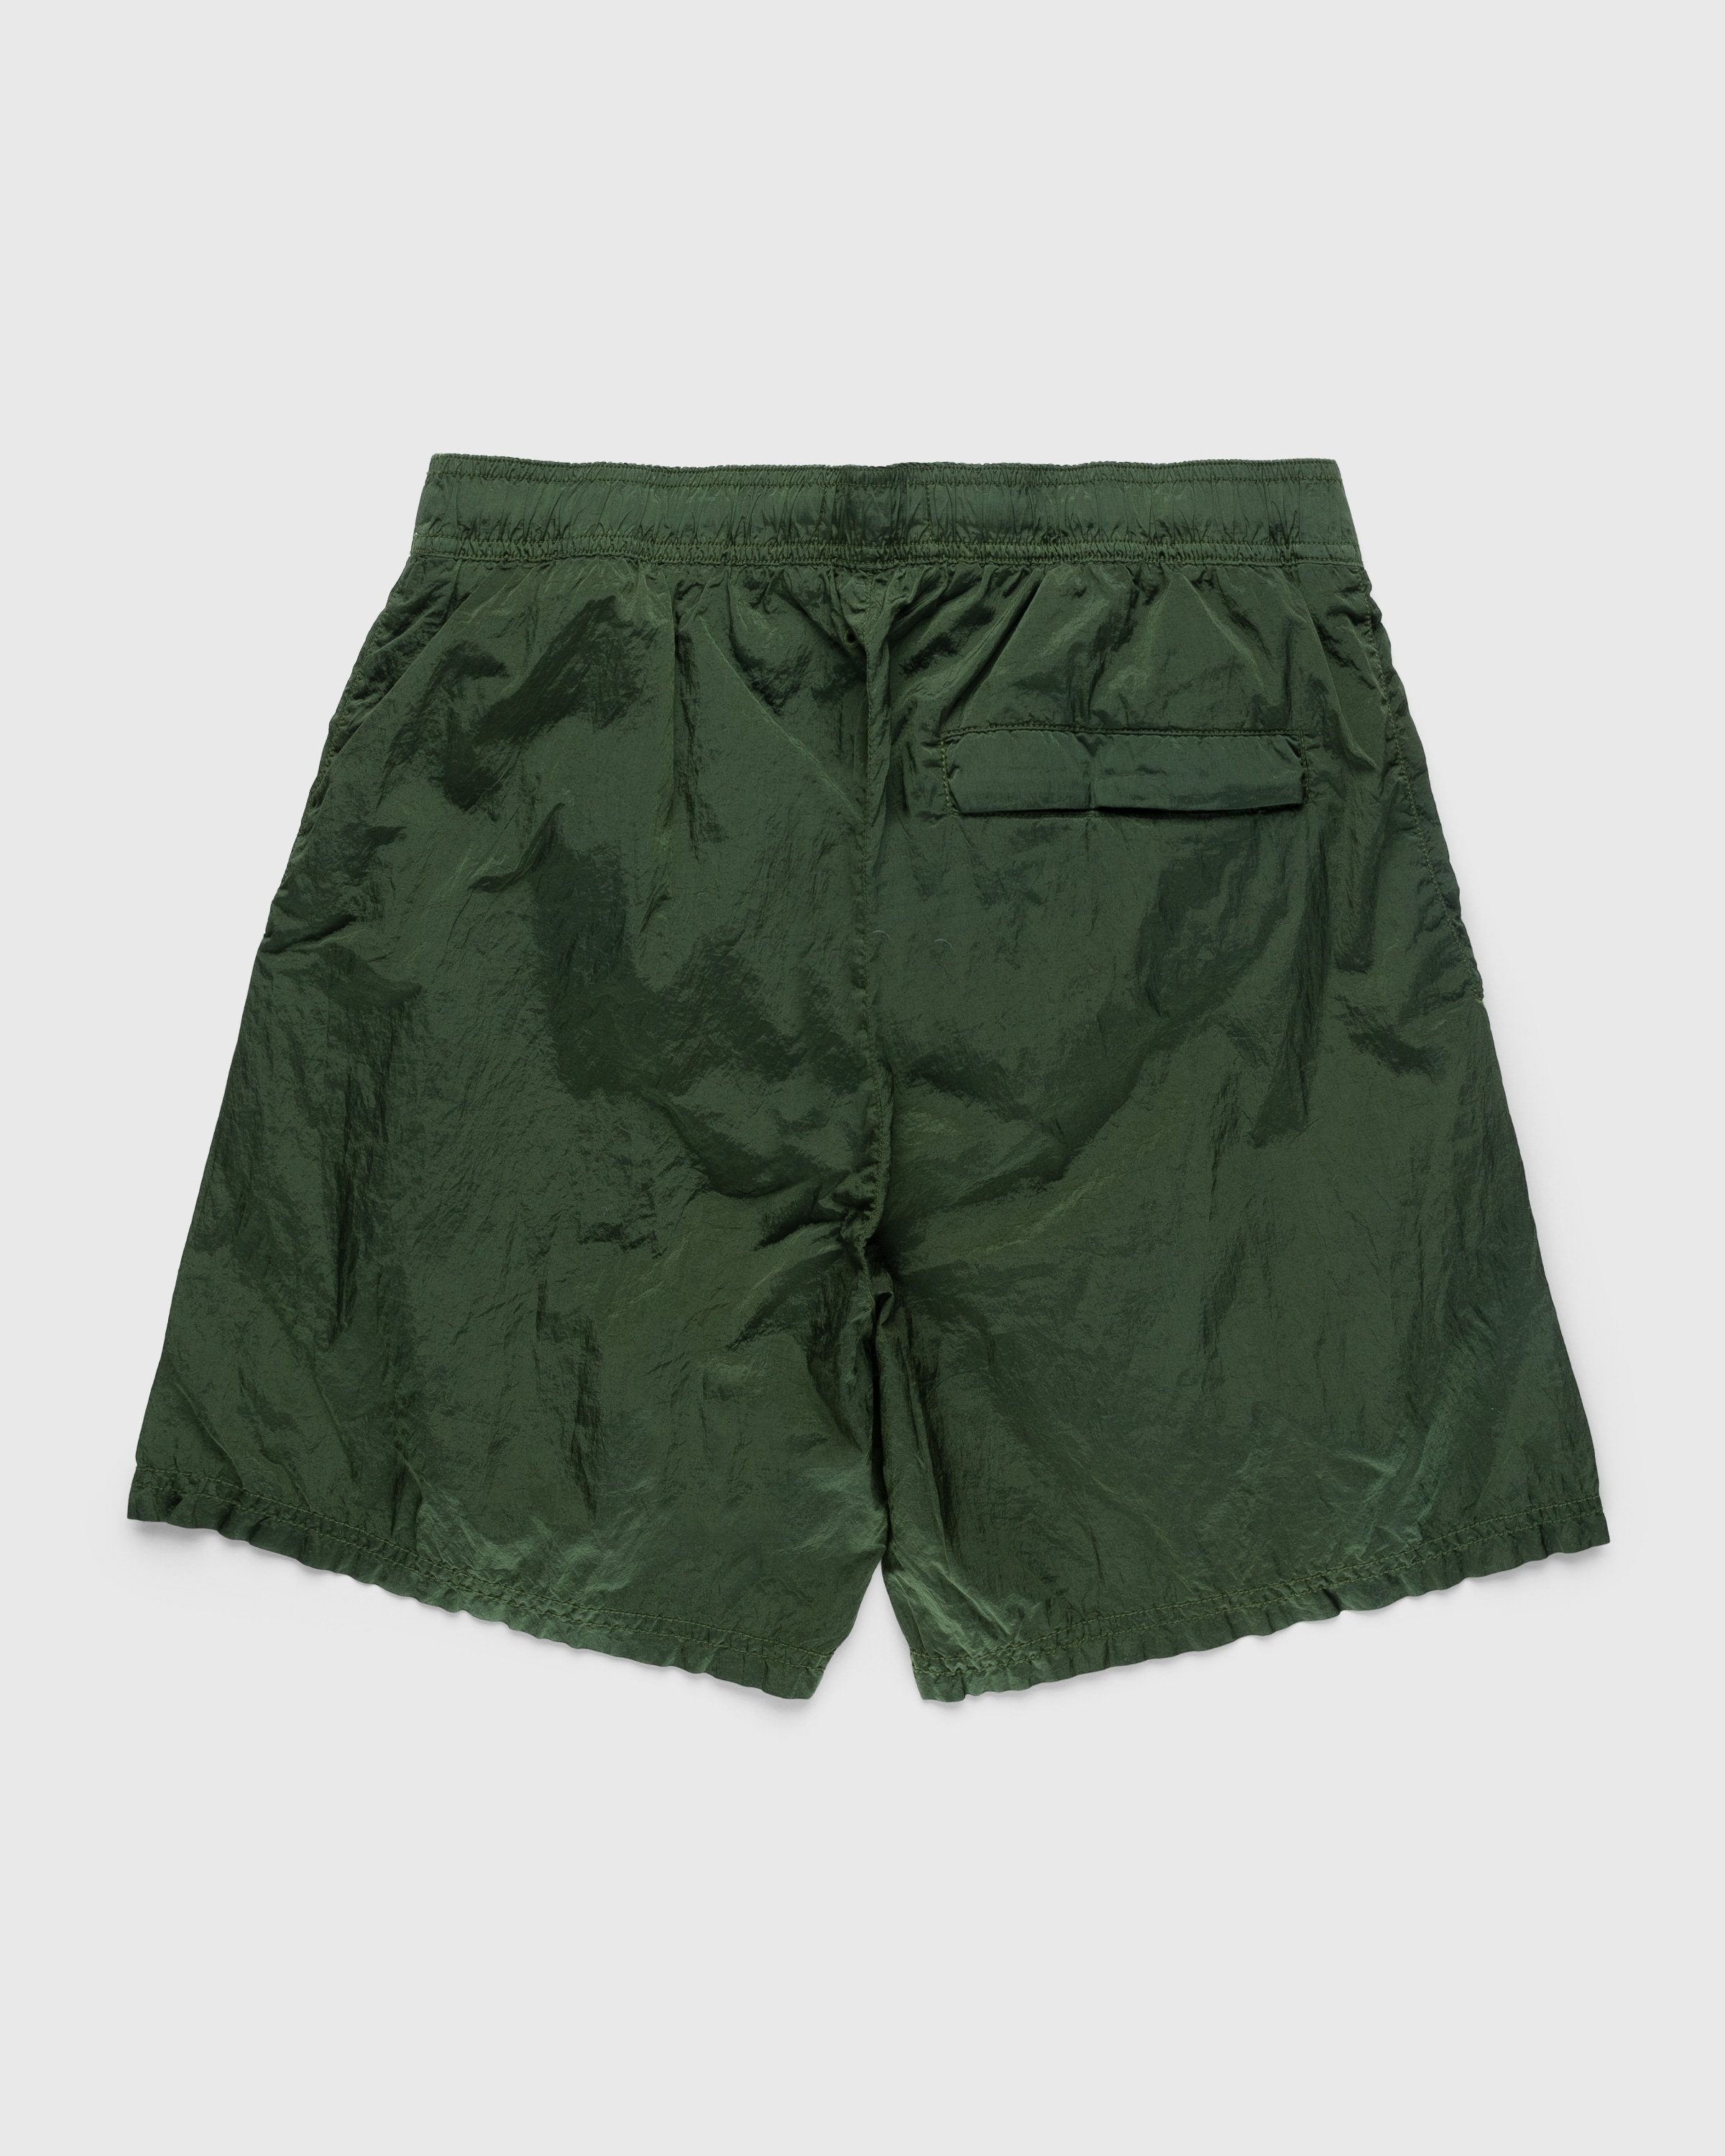 Stone Island – Nylon Metal Swim Shorts Olive - Swimwear - Green - Image 2